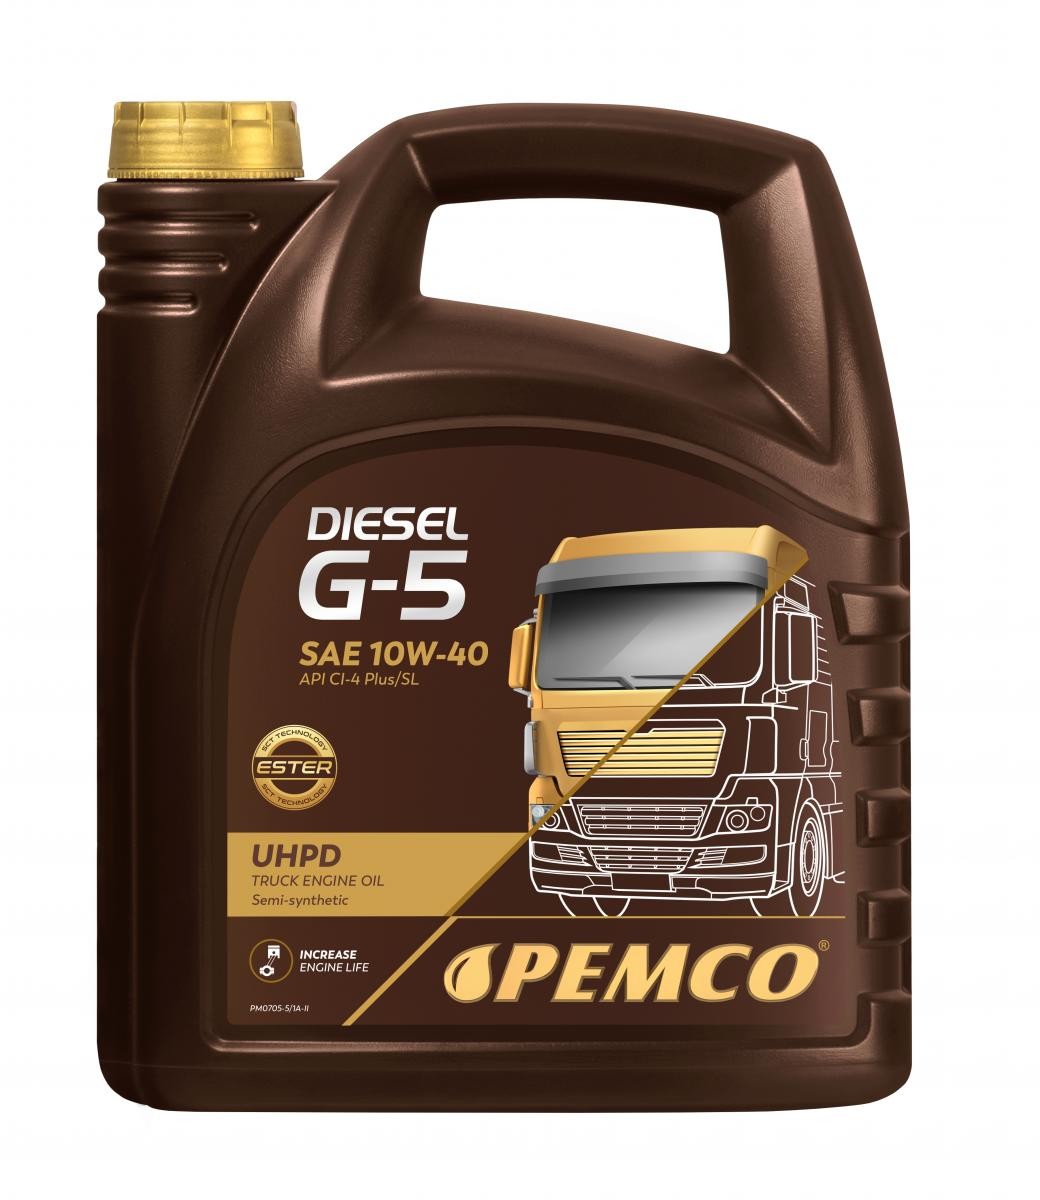 Automobile oil Mack EO-M Plus PEMCO - PM0705-5 Truck UHPD, DIESEL G-5 UHPD